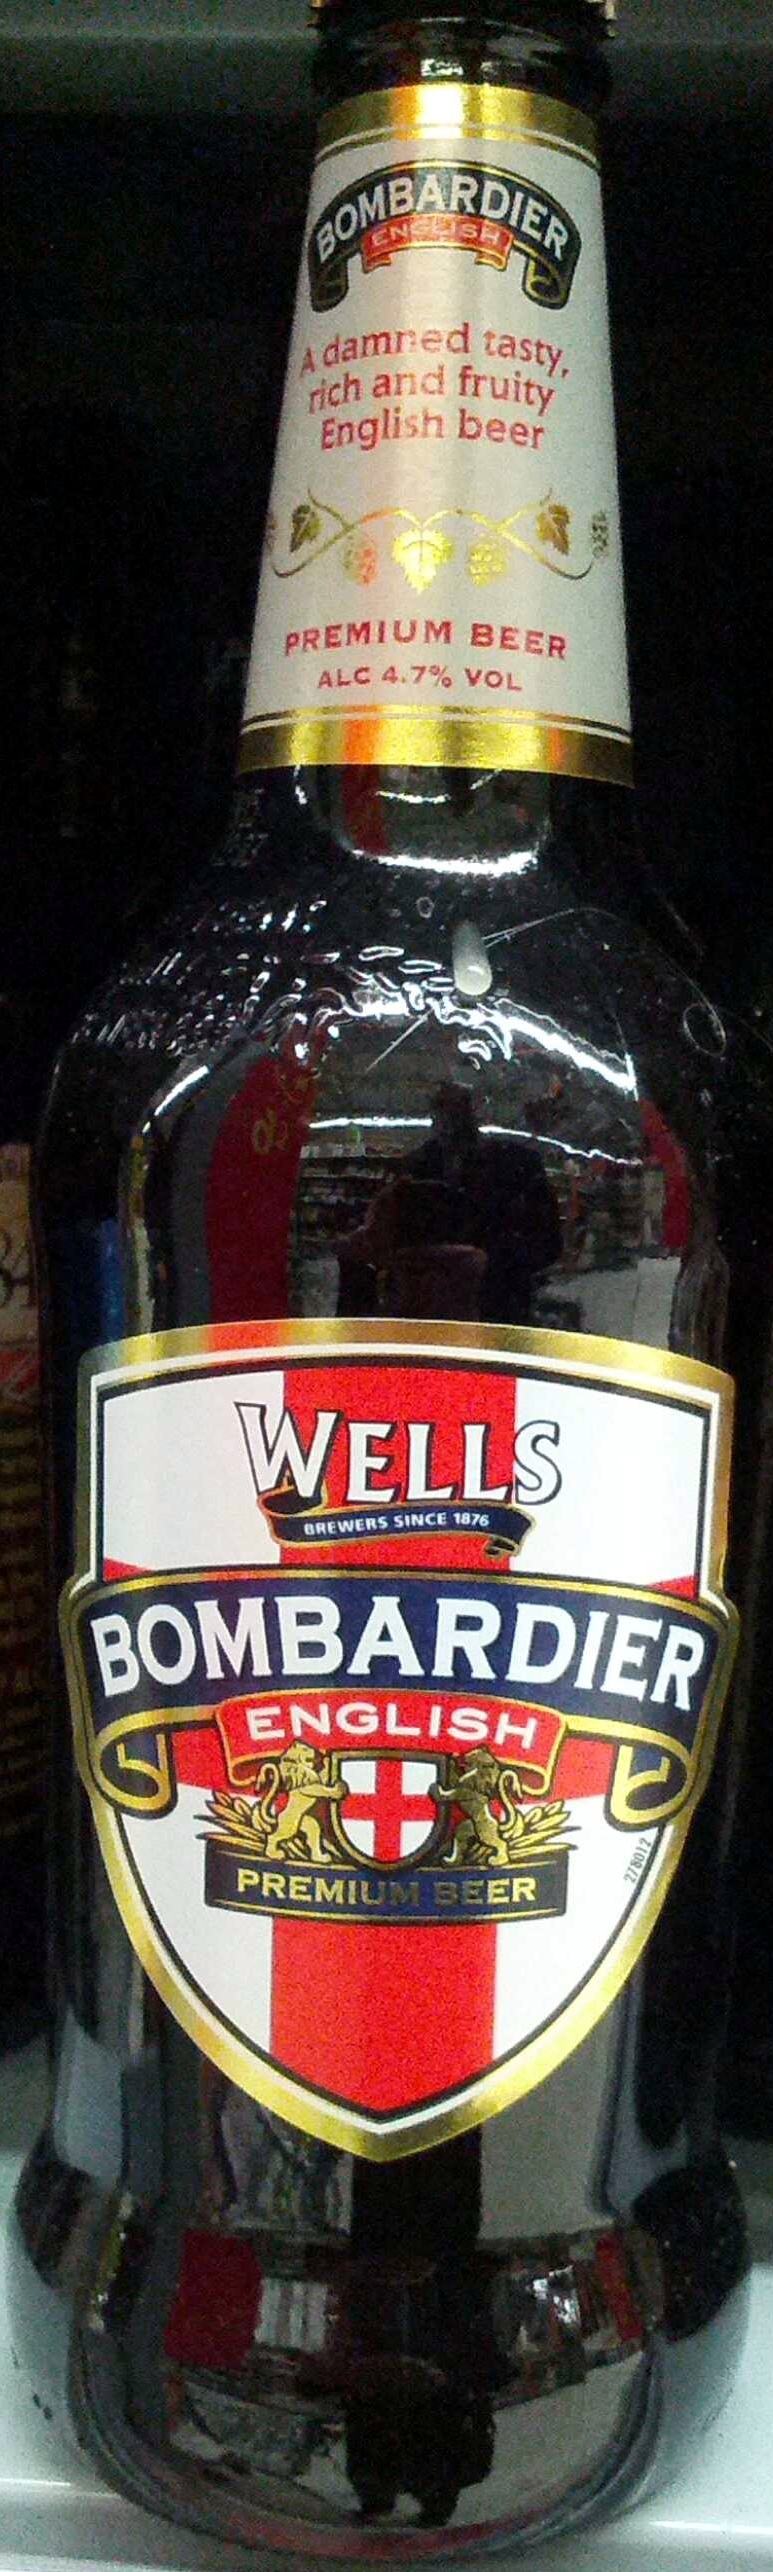 Wells Bombardier - Product